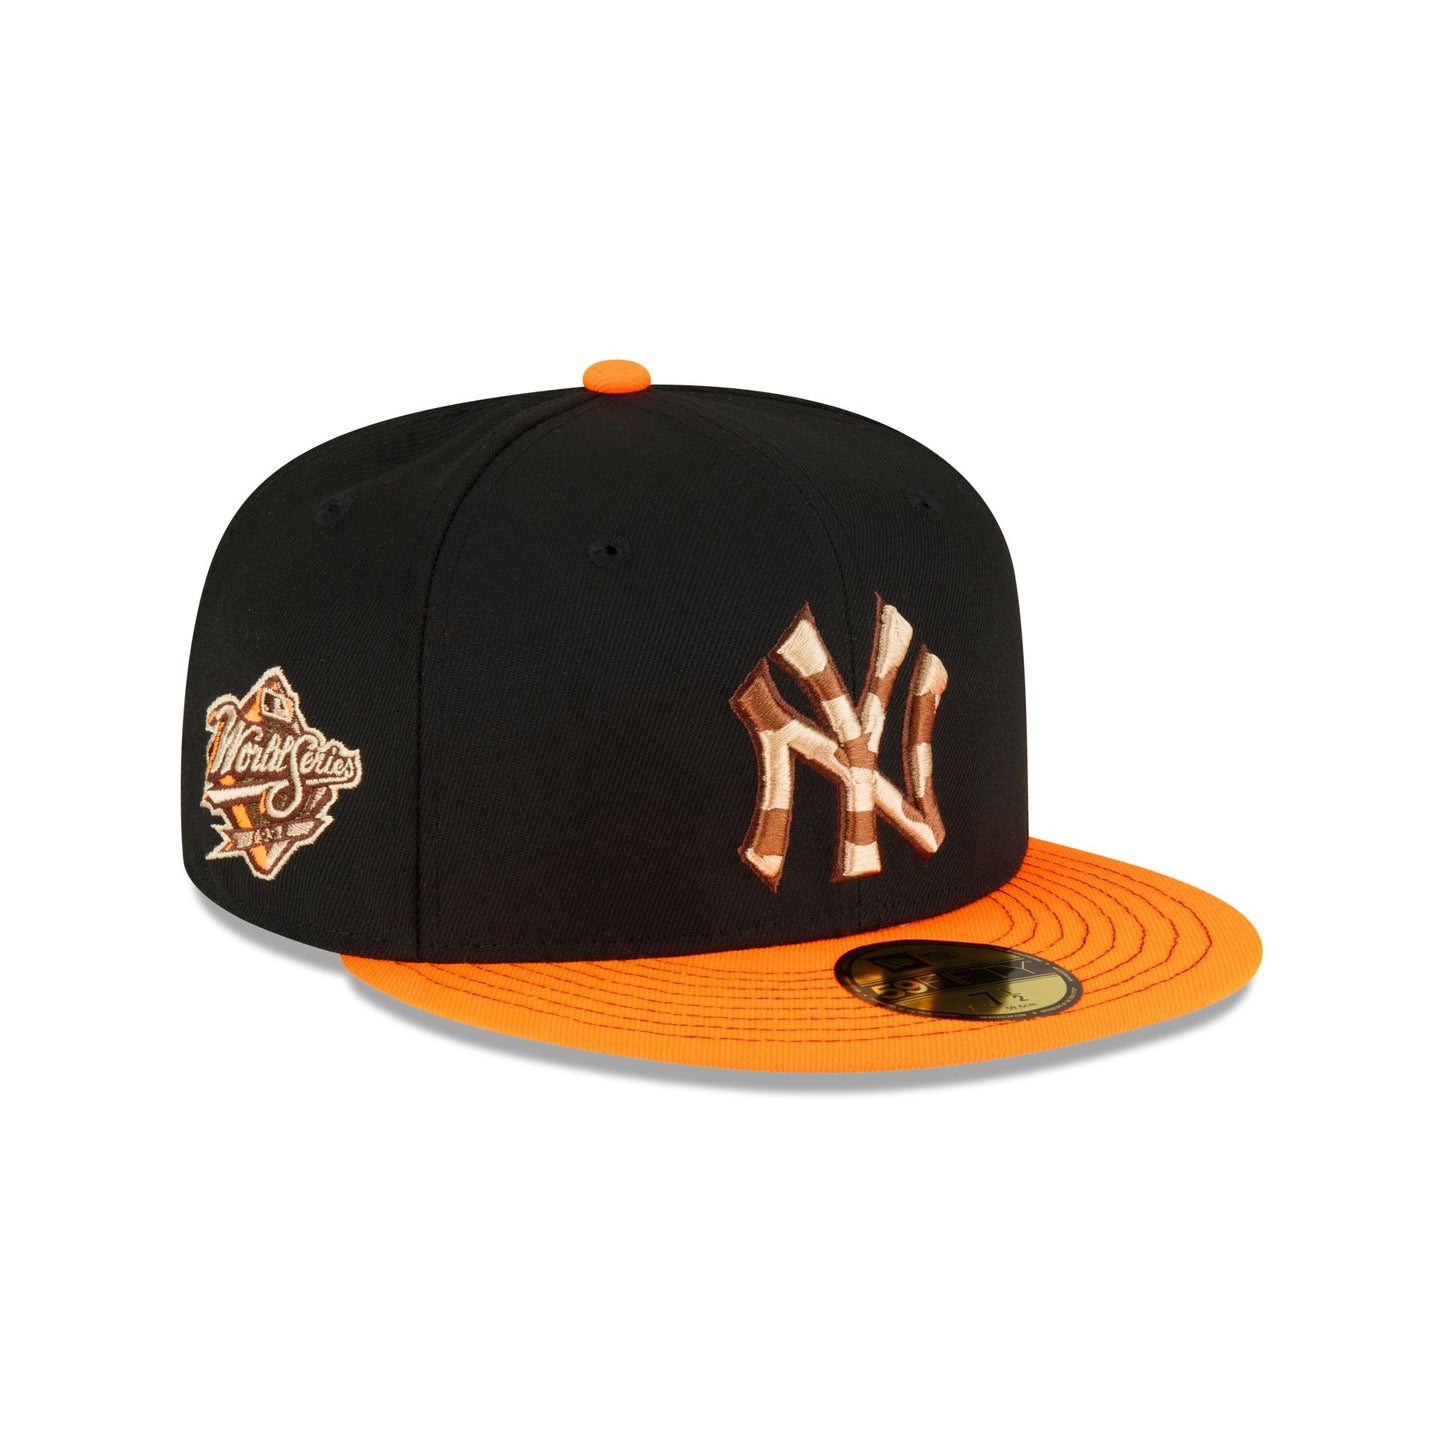 York Caps Yankees Fitted Era – Just New 59FIFTY Orange Cap New Hat Visor